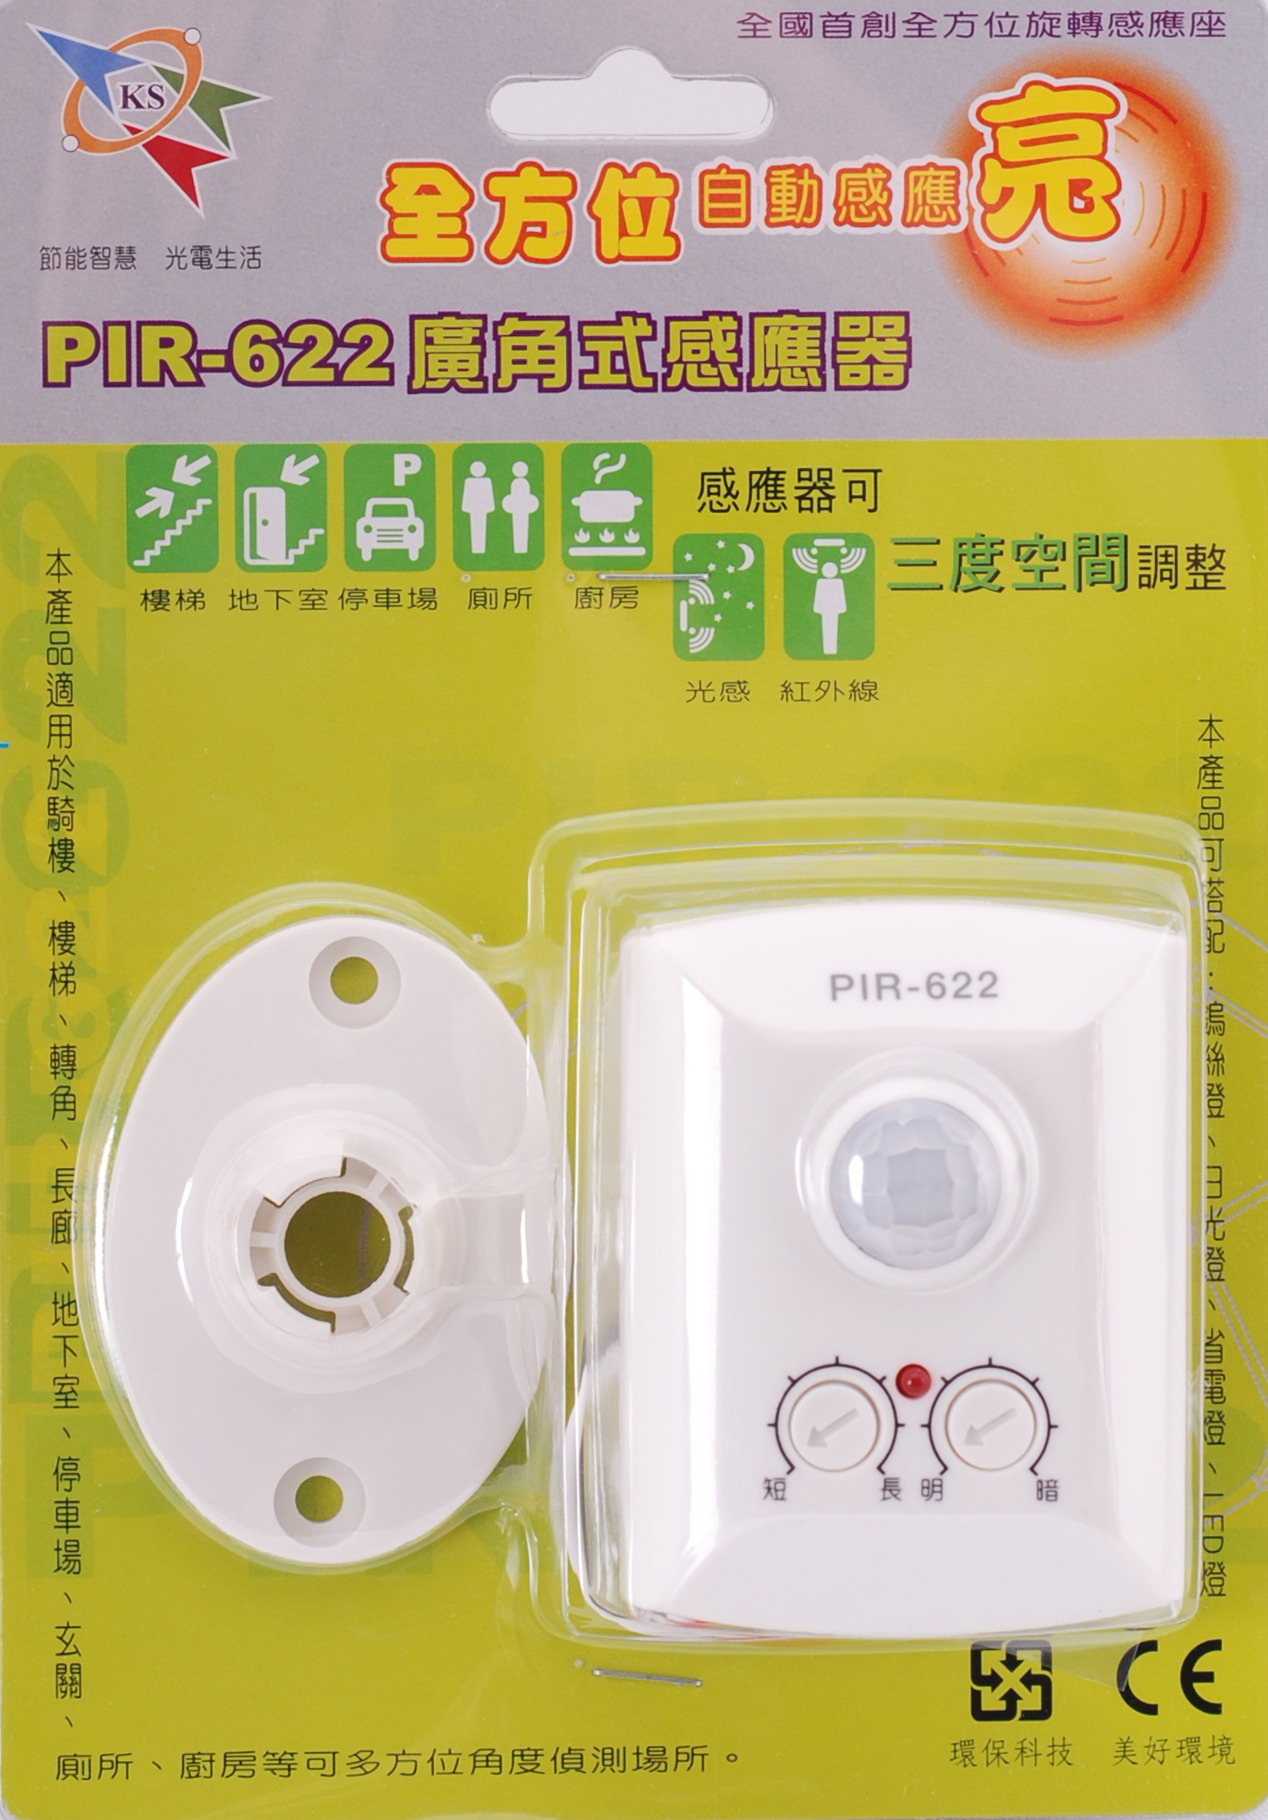 PIR-622 Wide-Angle Sensor